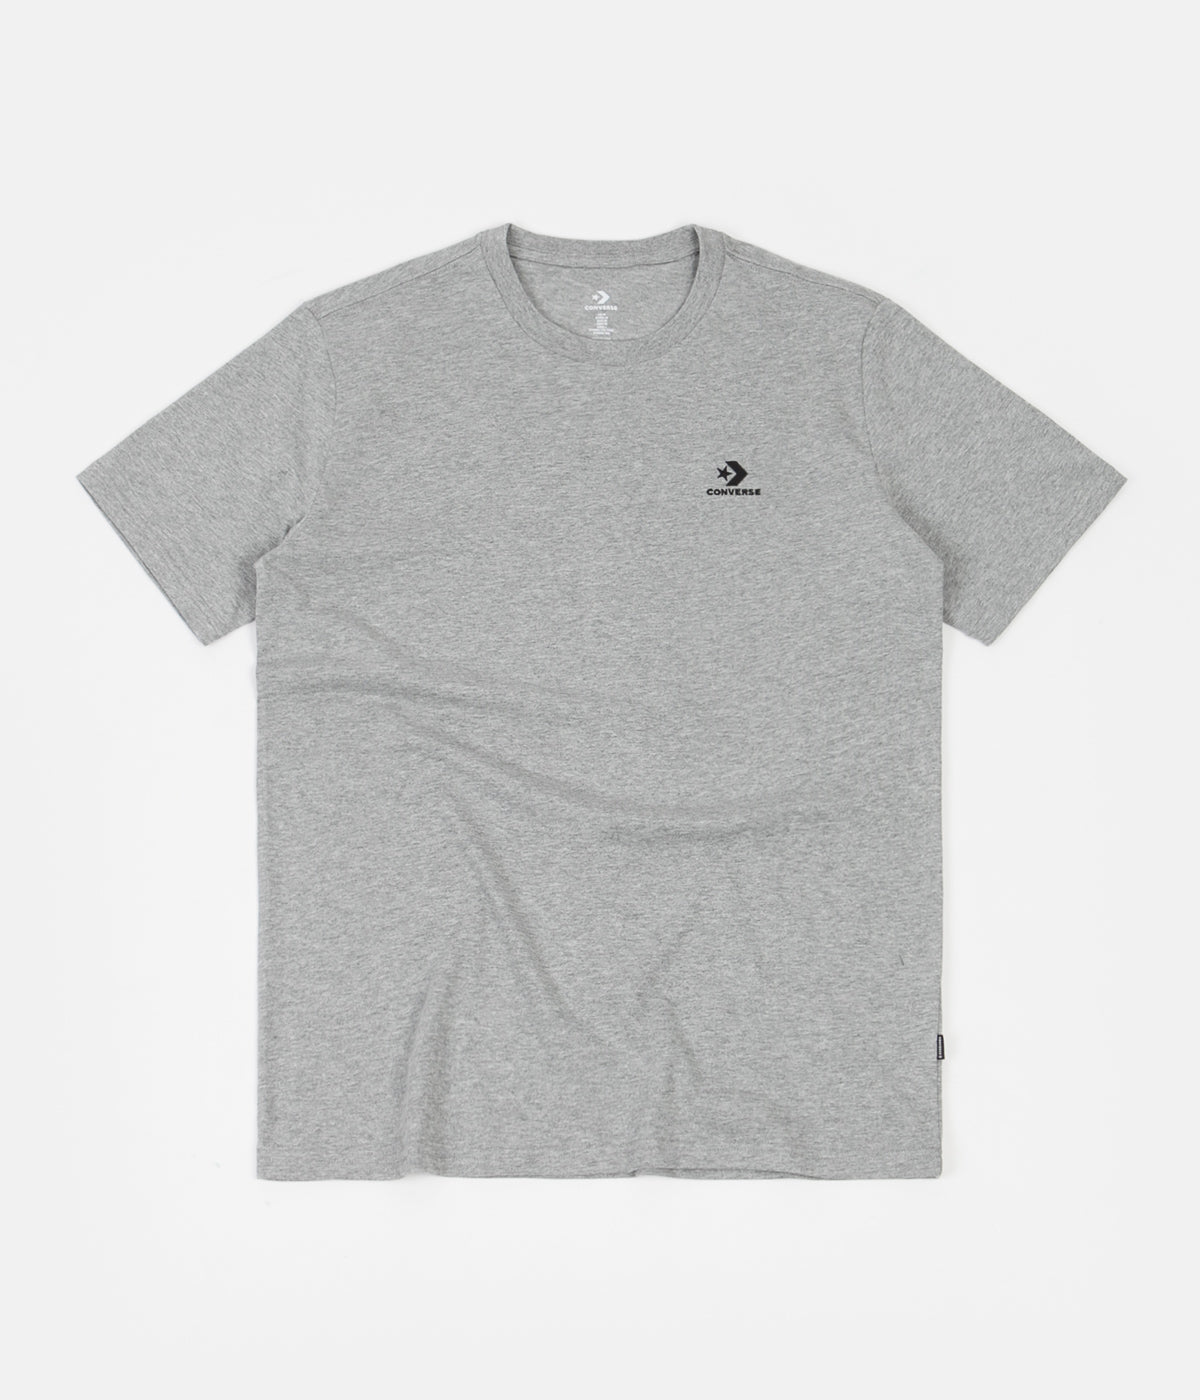 converse grey t shirt